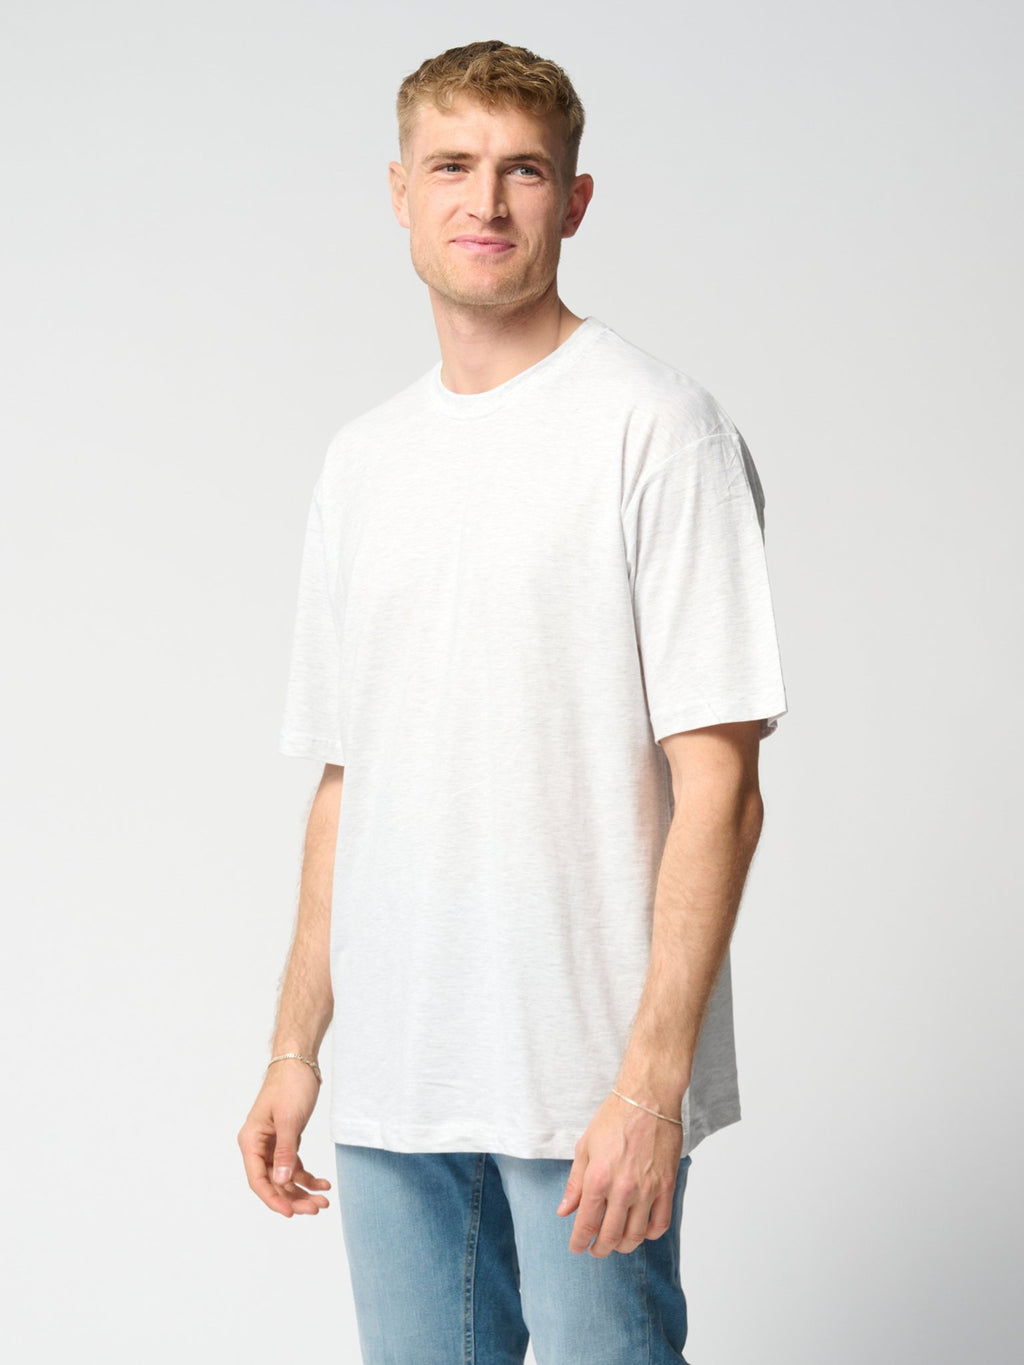 T -shirt oversize - grigio chiaro